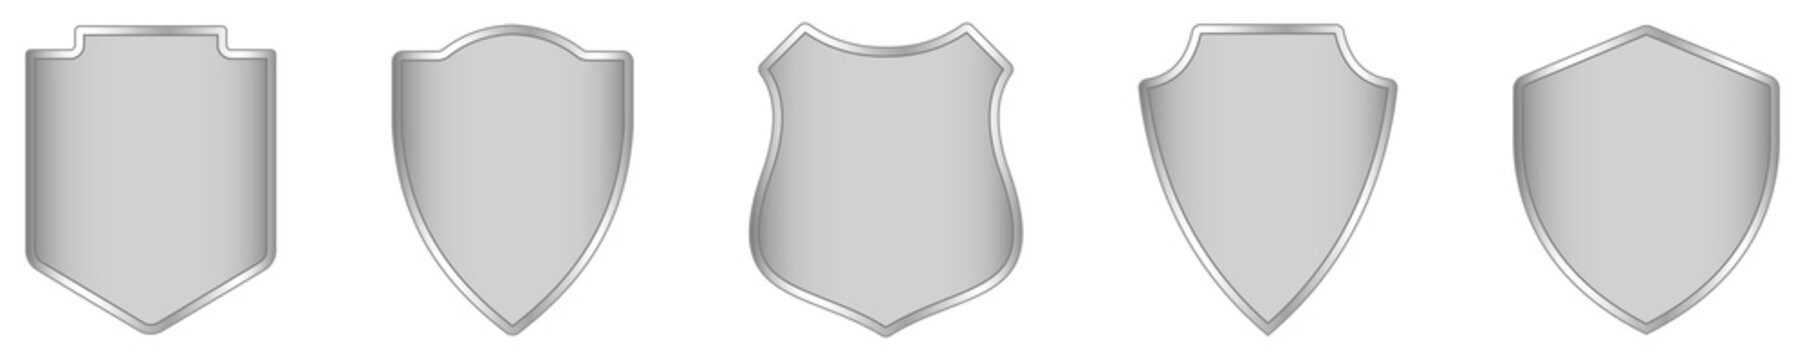 Silver shield icon collection. Vector illustration